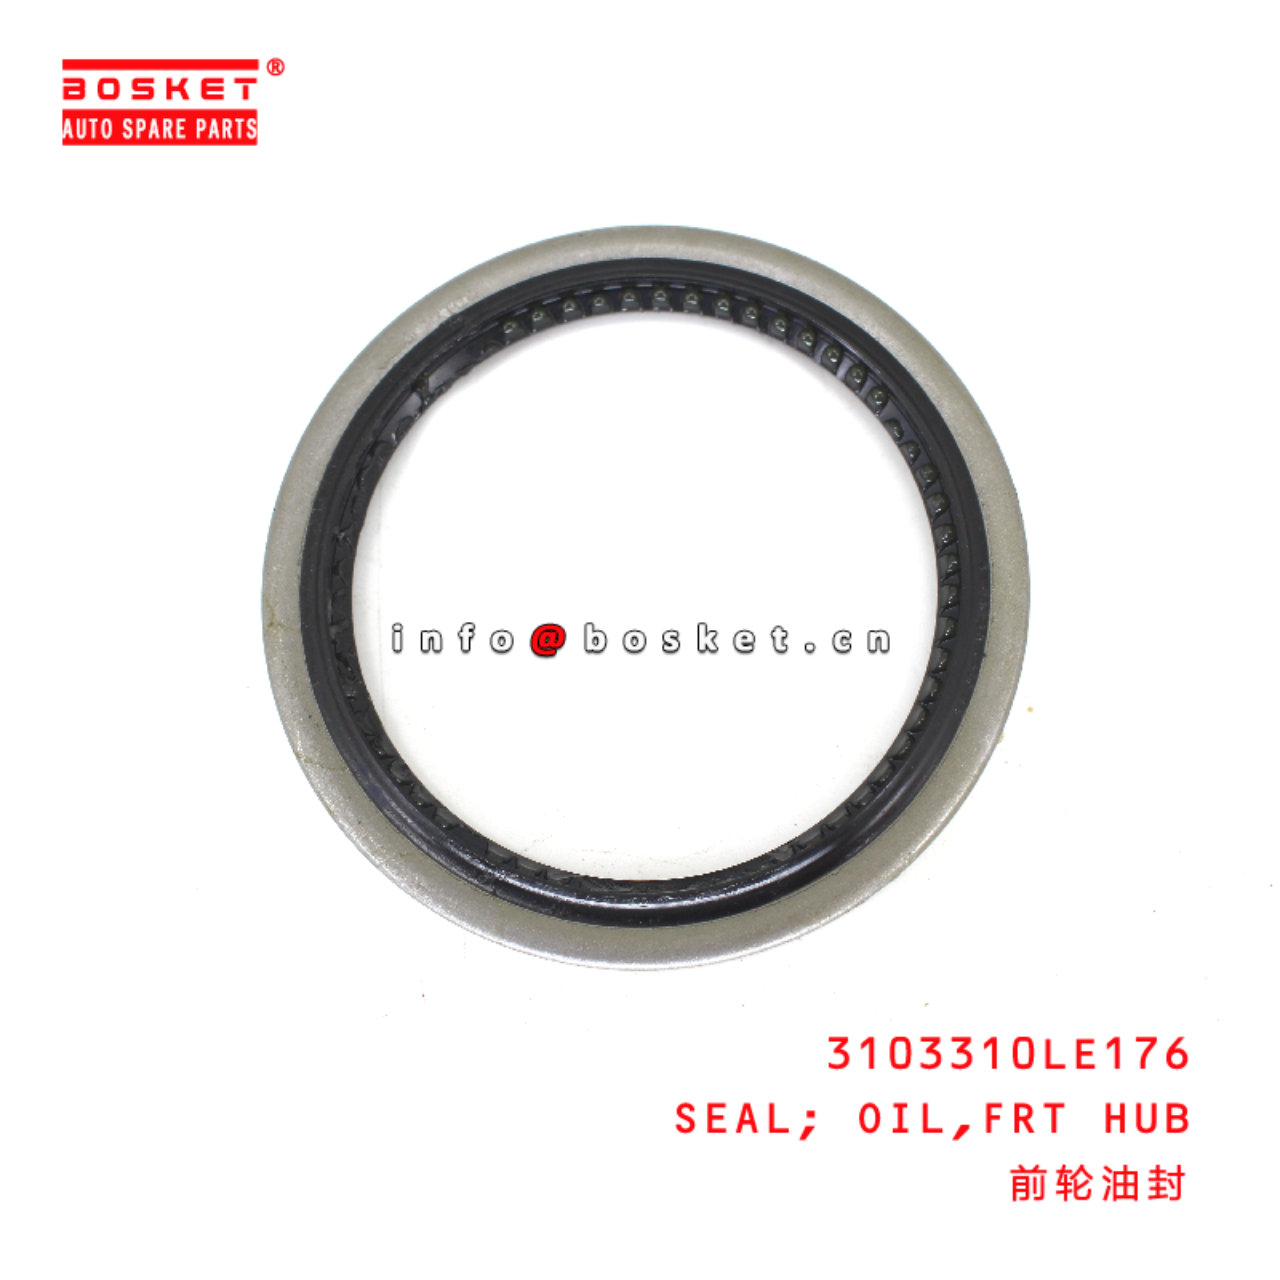 3103310LE176 Oil Front Hub Seal suitable for ISUZU JAC N75  3103310LE176